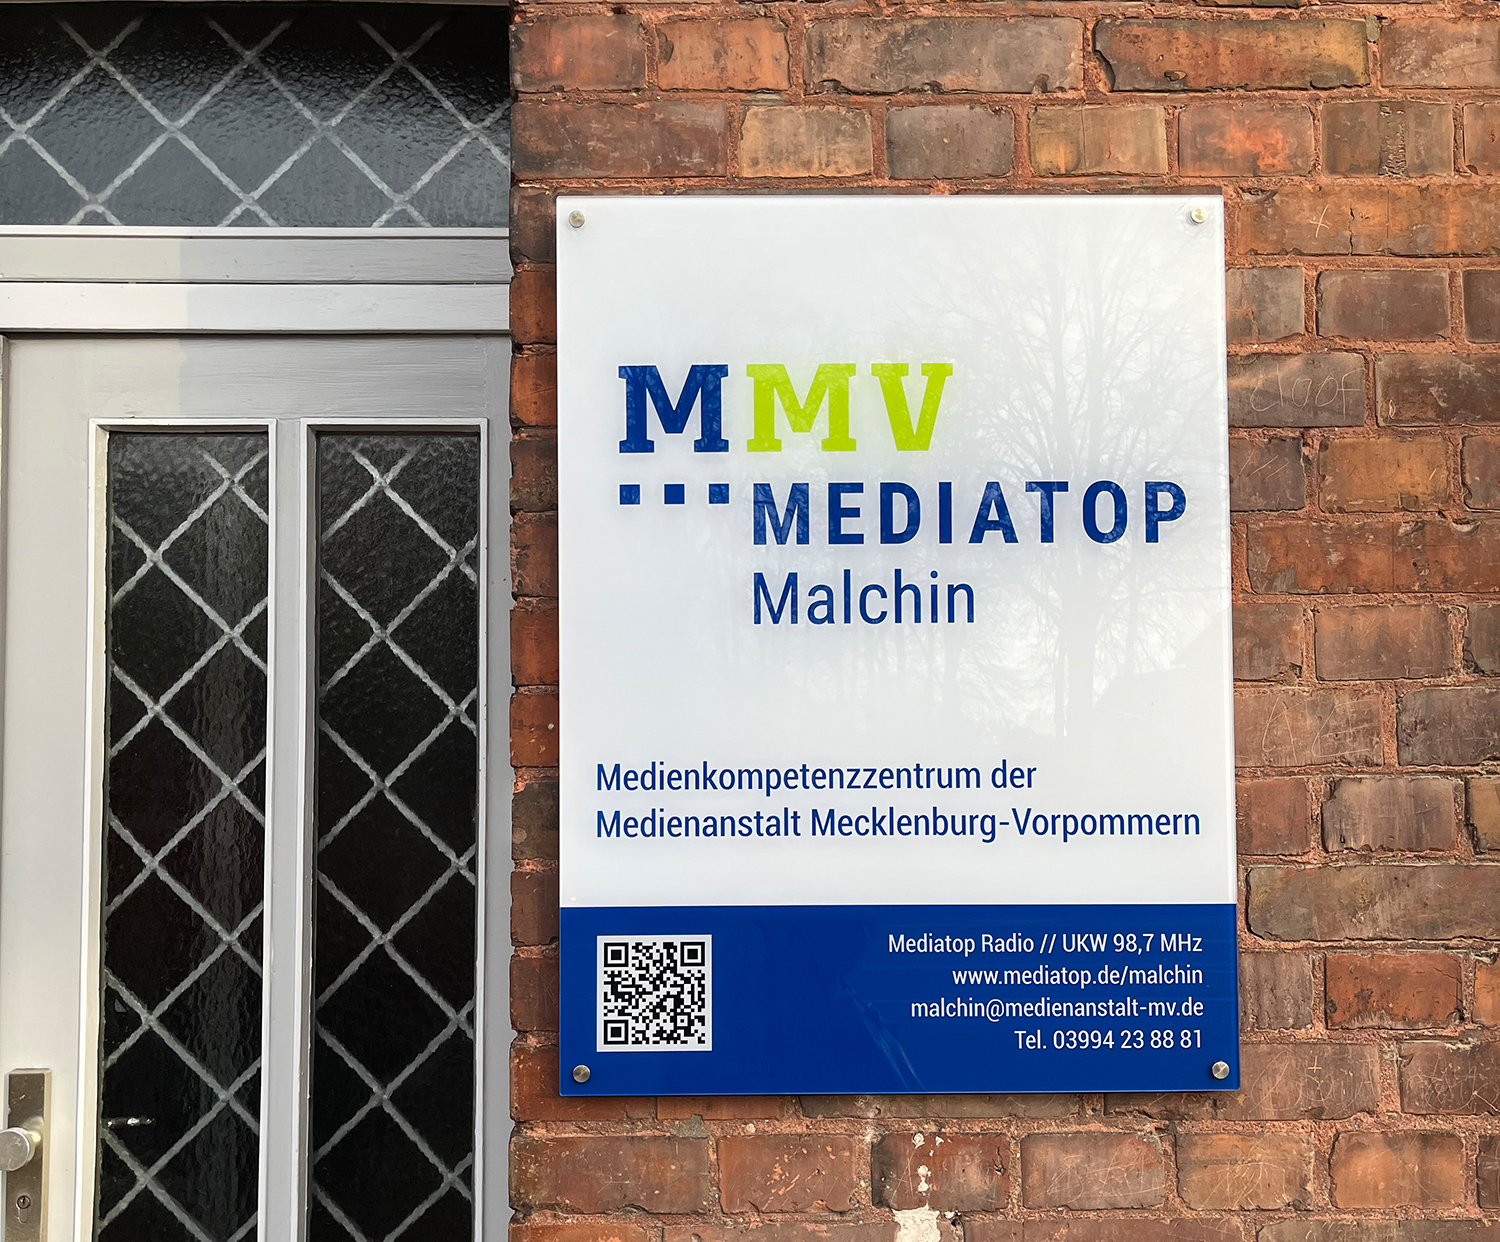 Mediatop Malchin